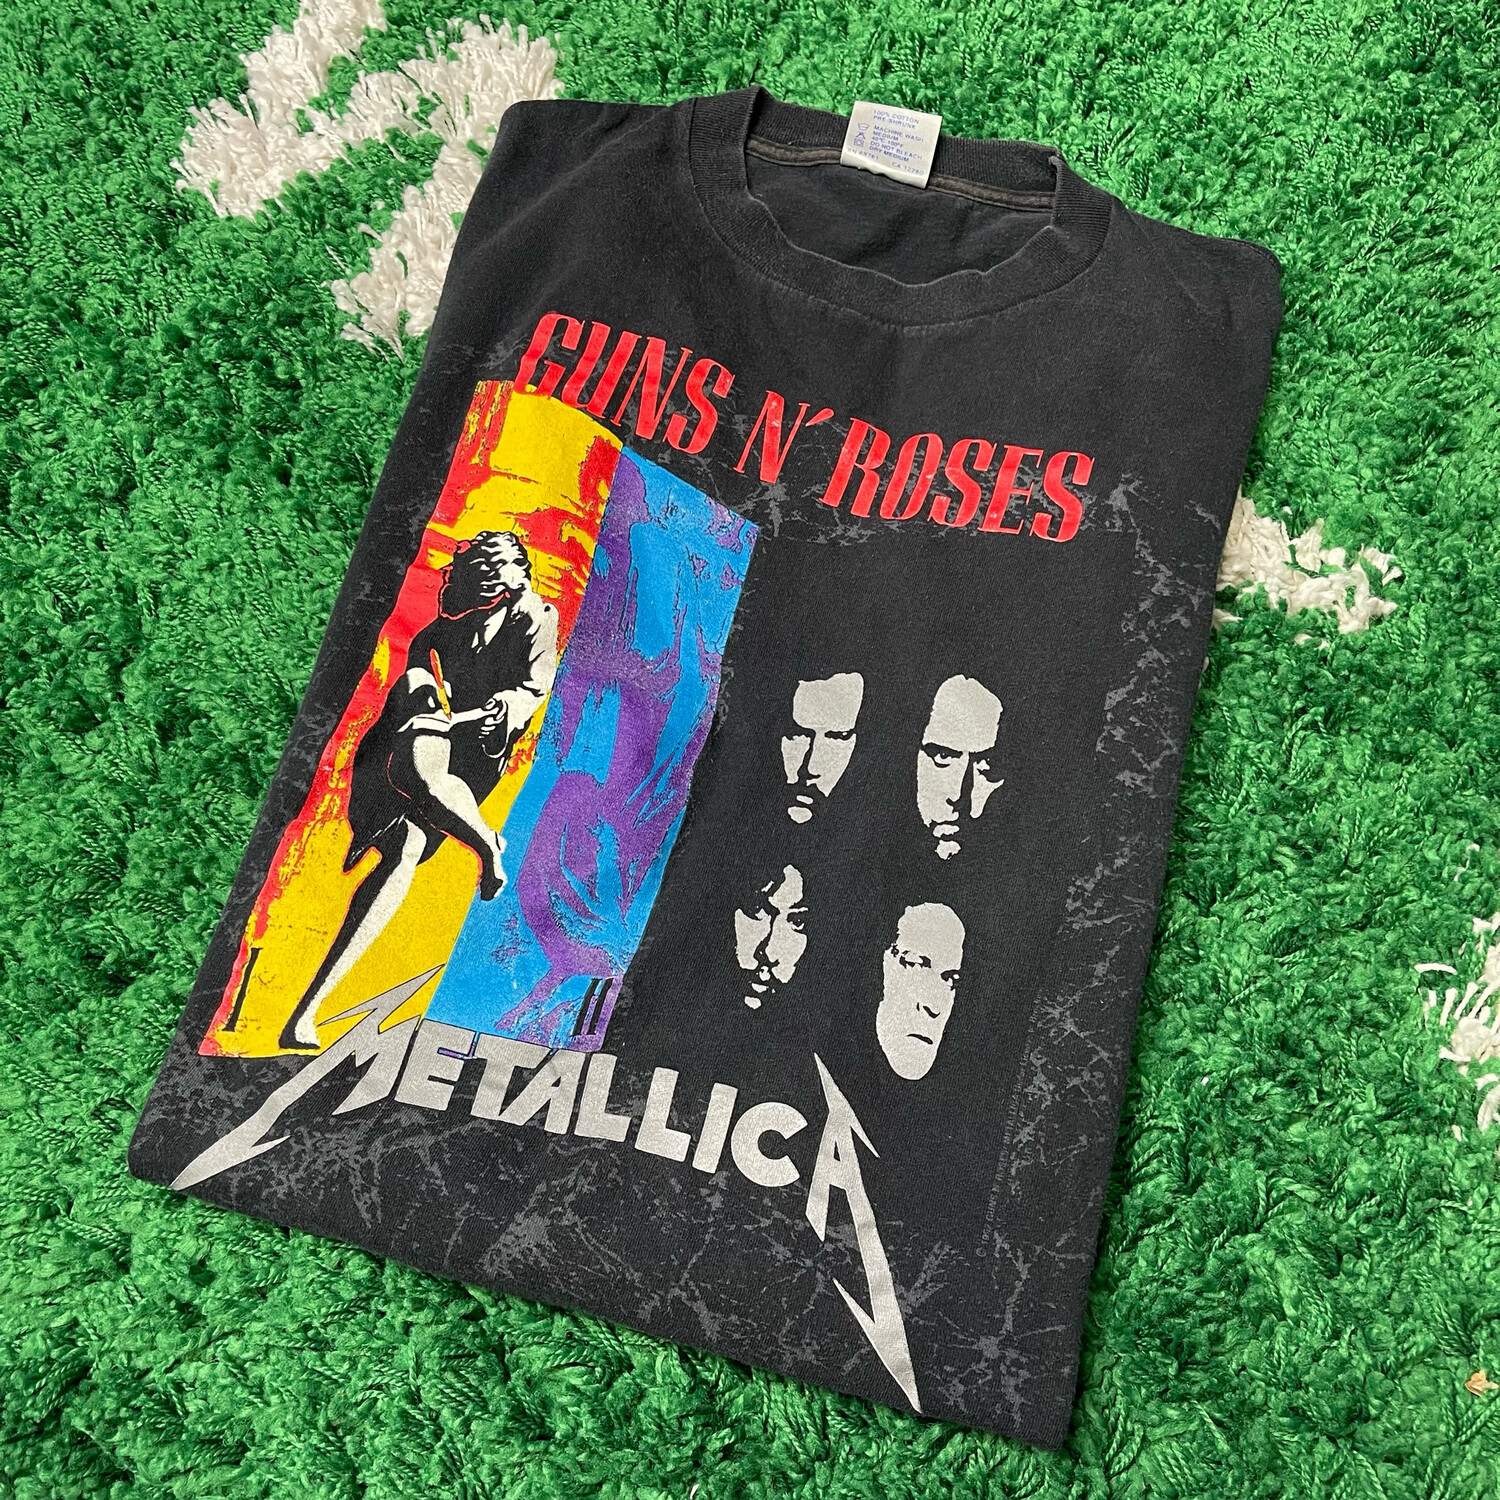 Metallica Guns N Roses 1992 Tour Tee Size XL